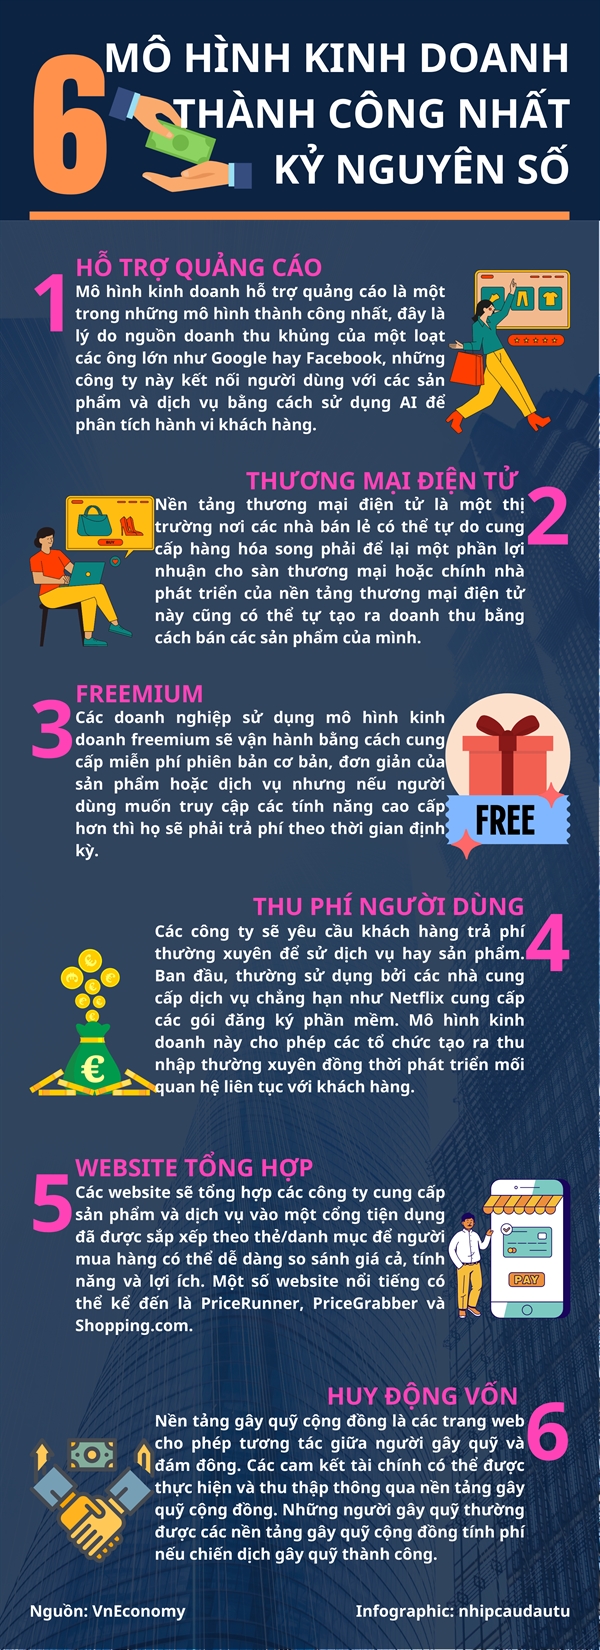 [Infographic] 6 mo hinh kinh doanh thanh cong nhat ky nguyen so